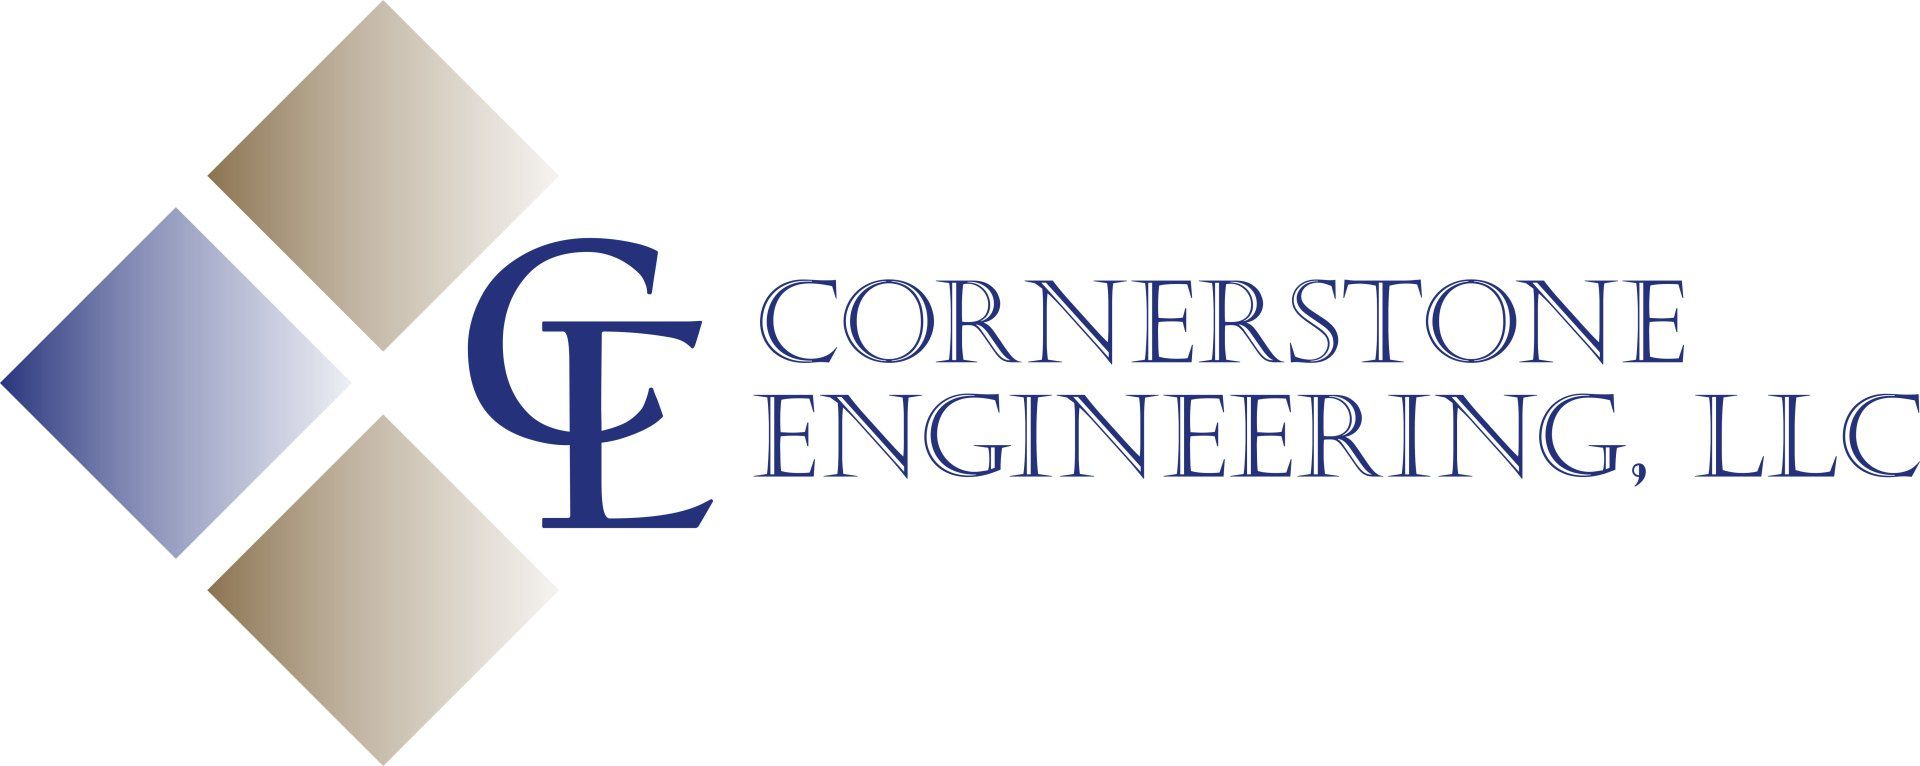 Cornerstone Engineering, LLC